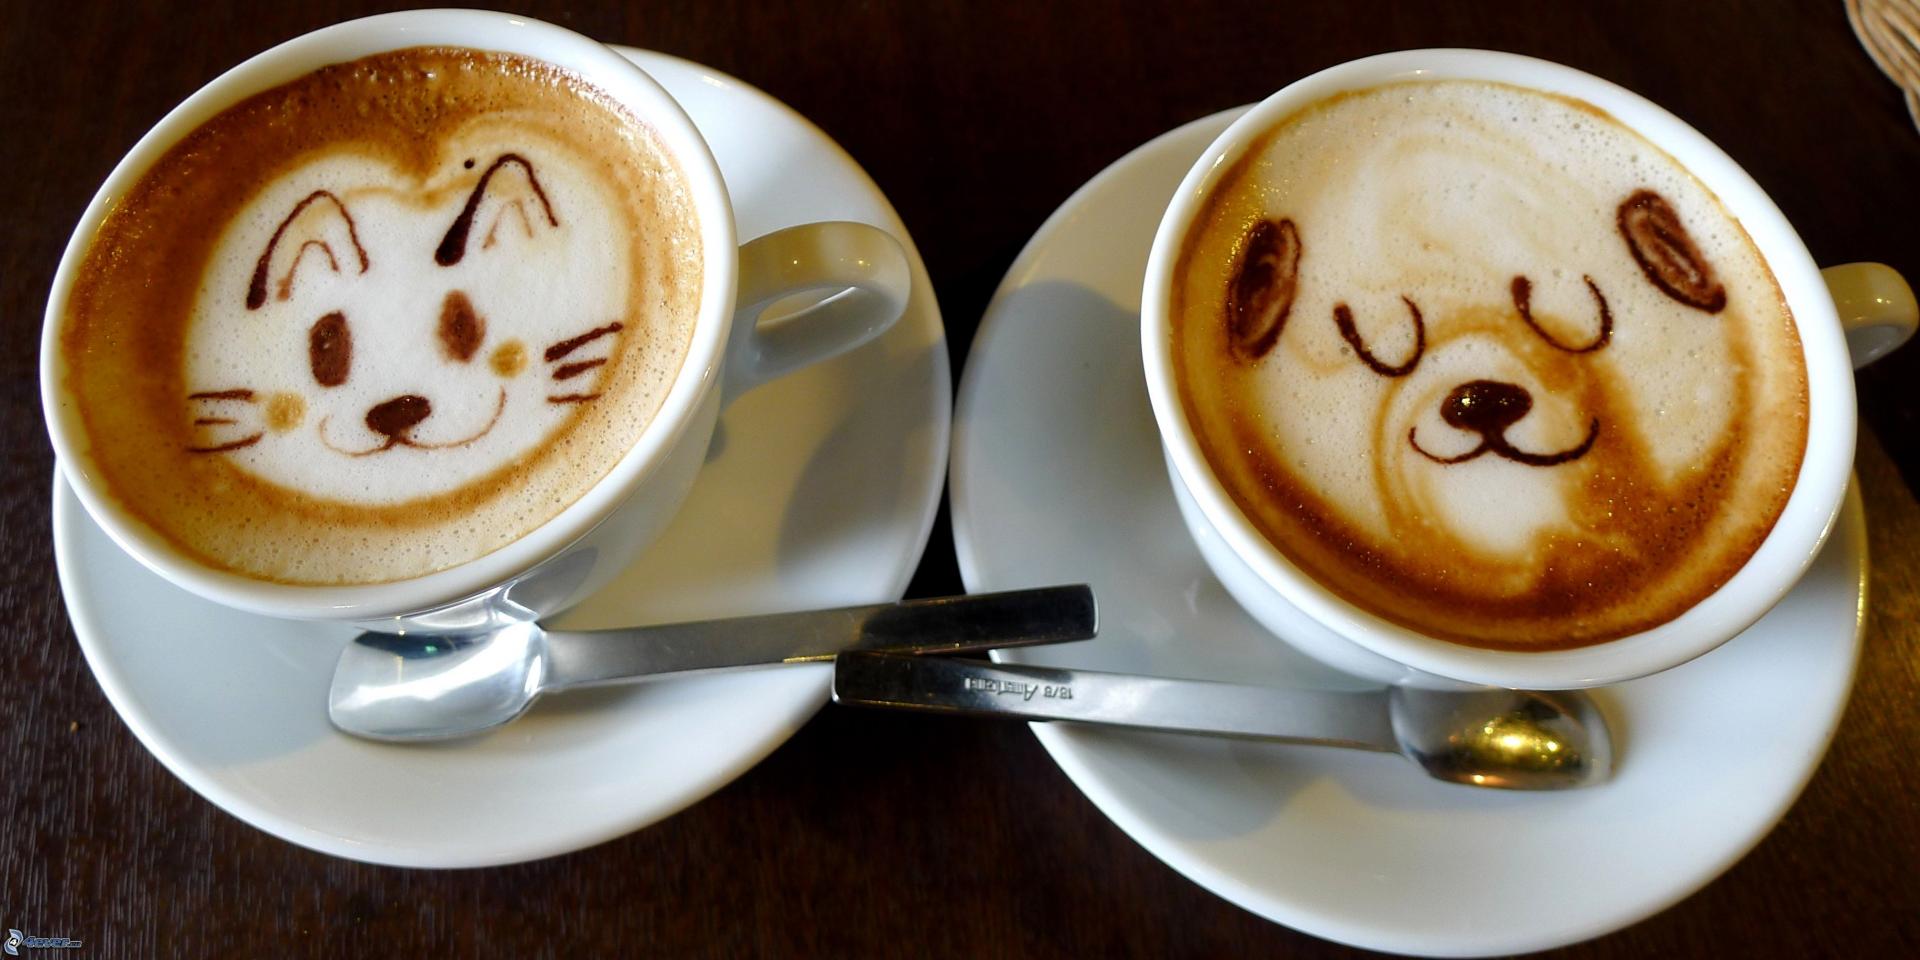 Tasse de cafe latte art chat ours 208457